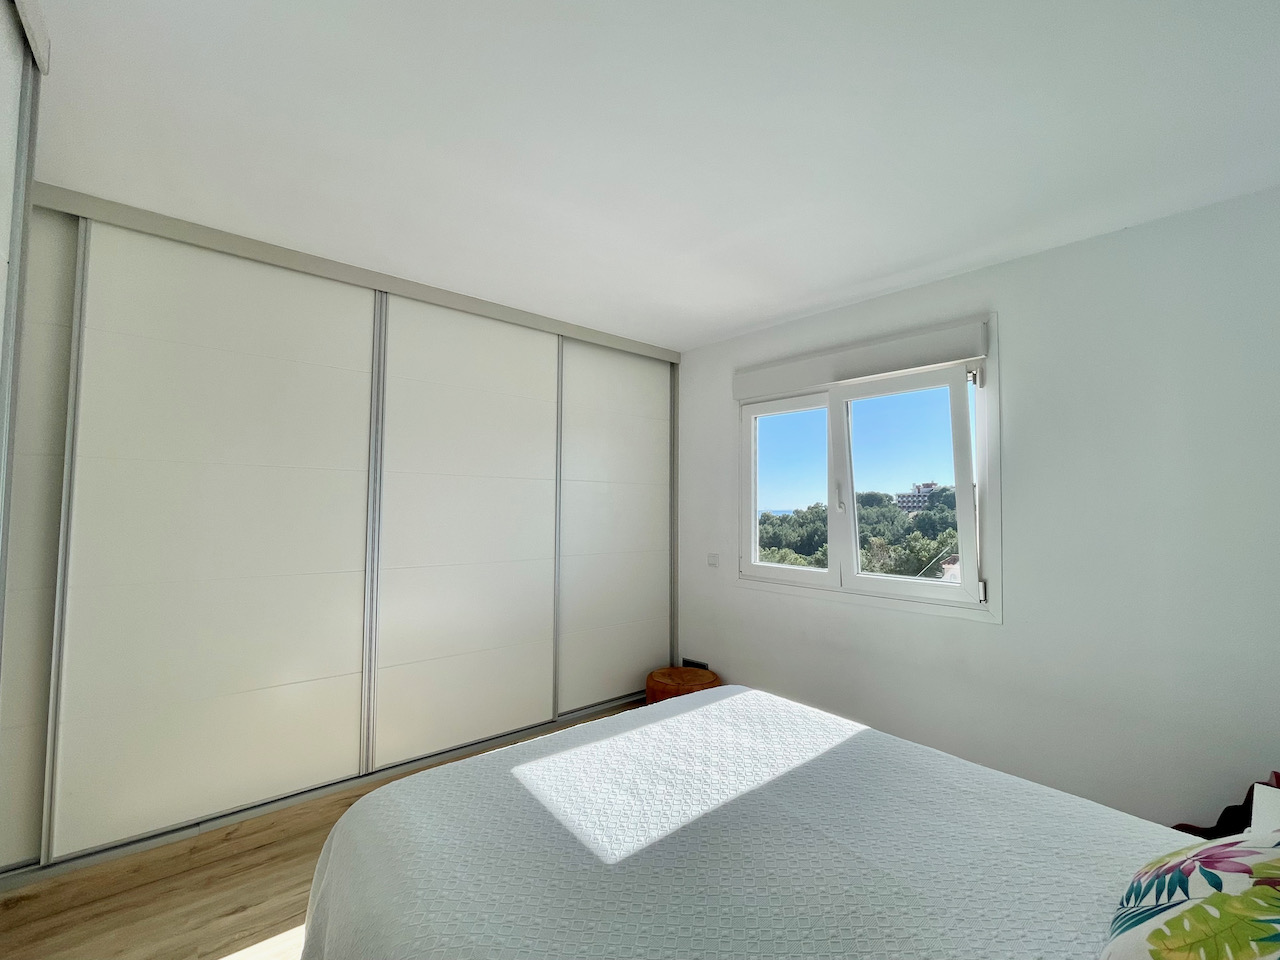 Apartment with spectacular sea views in Cas Catala, Calvia.